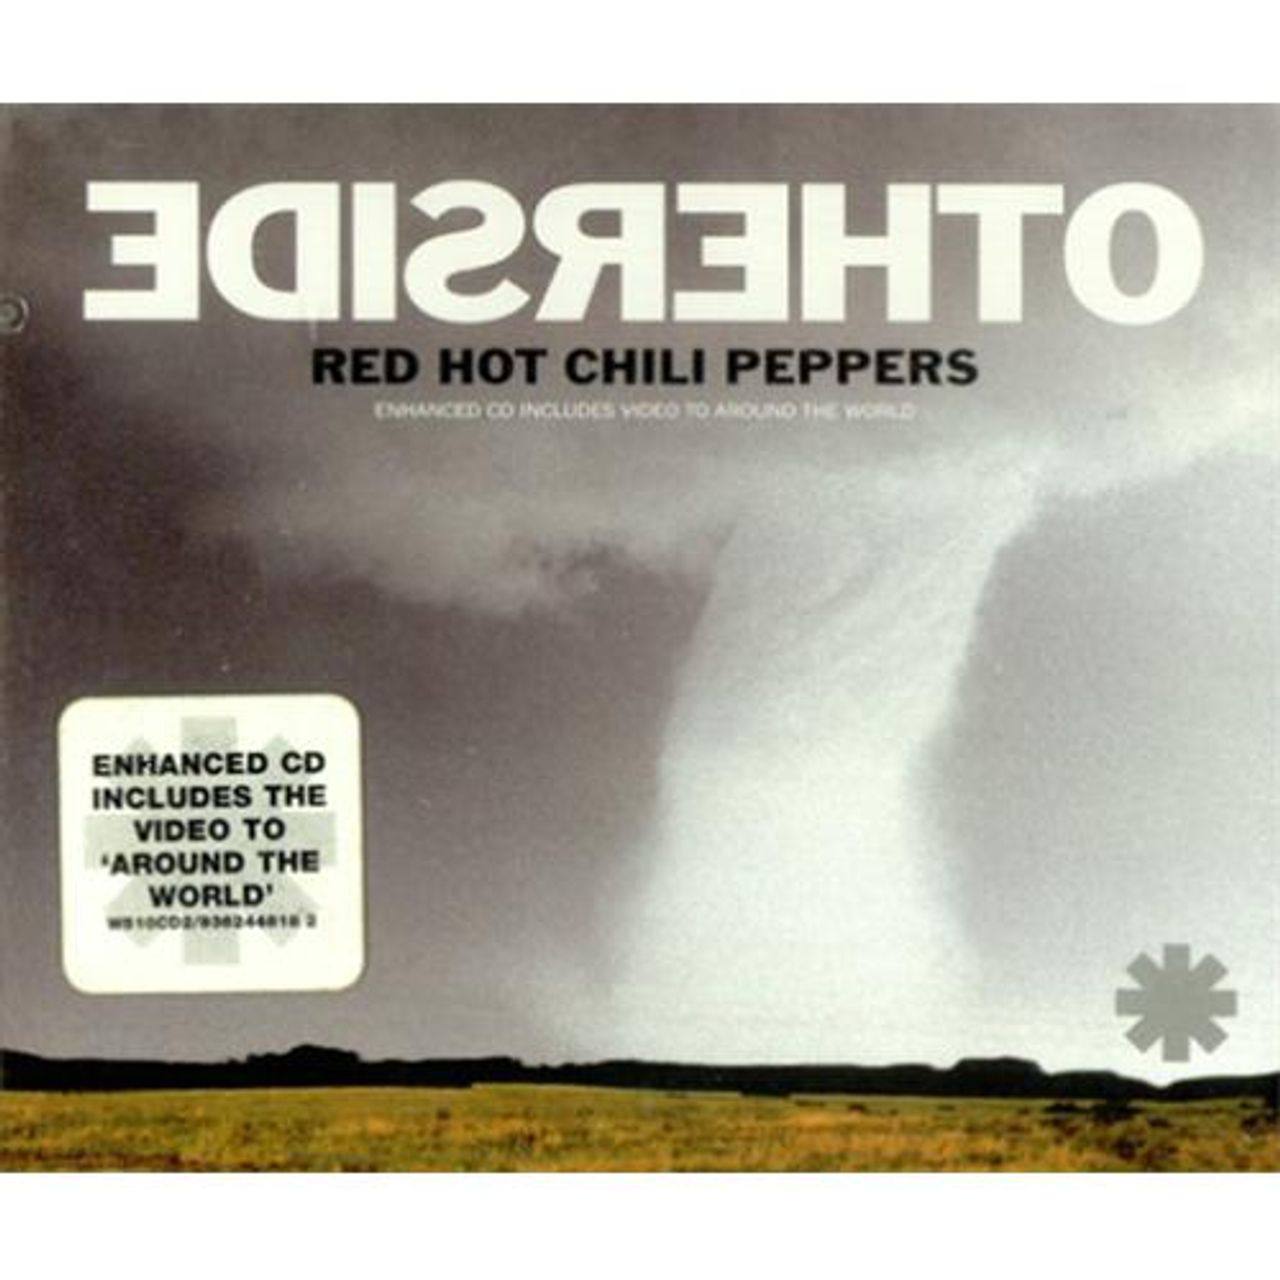 symaskine moderat Ulempe Red Hot Chili Peppers Otherside UK 2-CD single set — RareVinyl.com